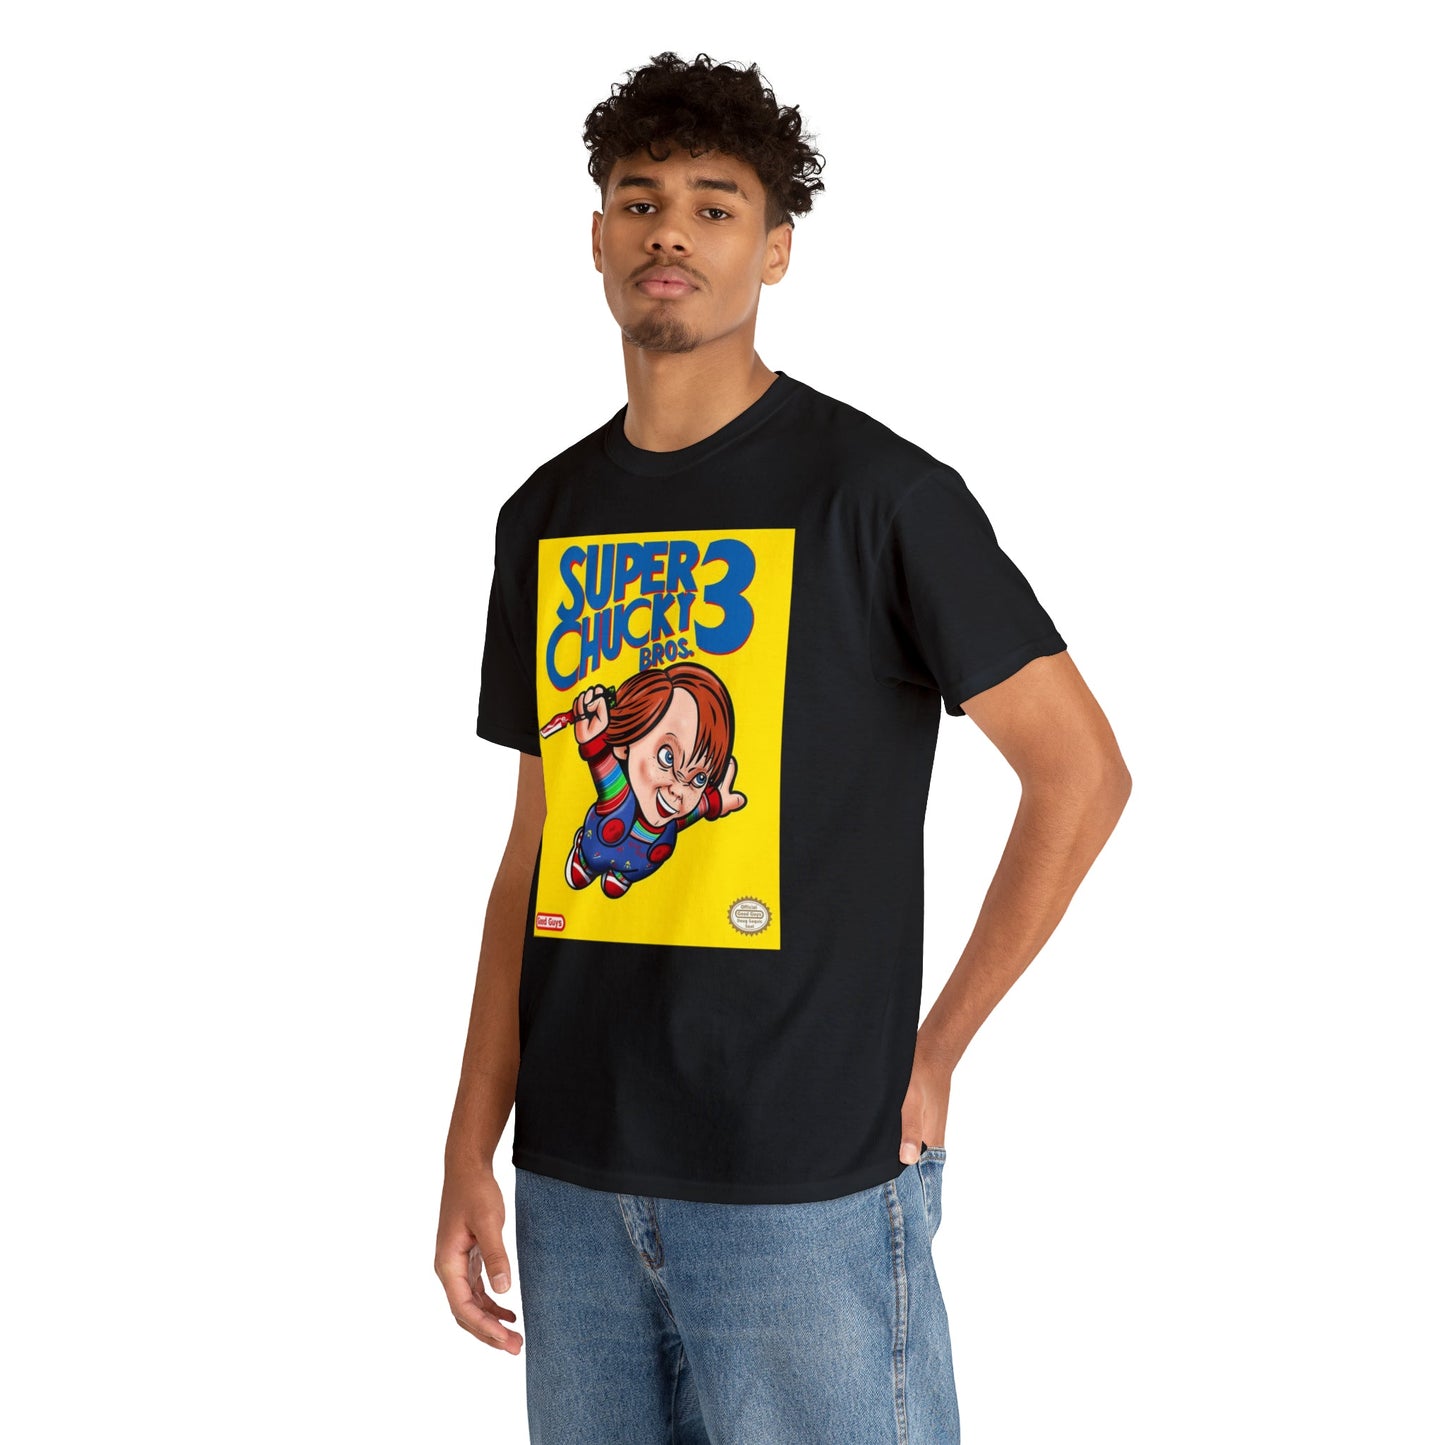 Super Chucky Bros 3 T-Shirt - RetroTeeShop